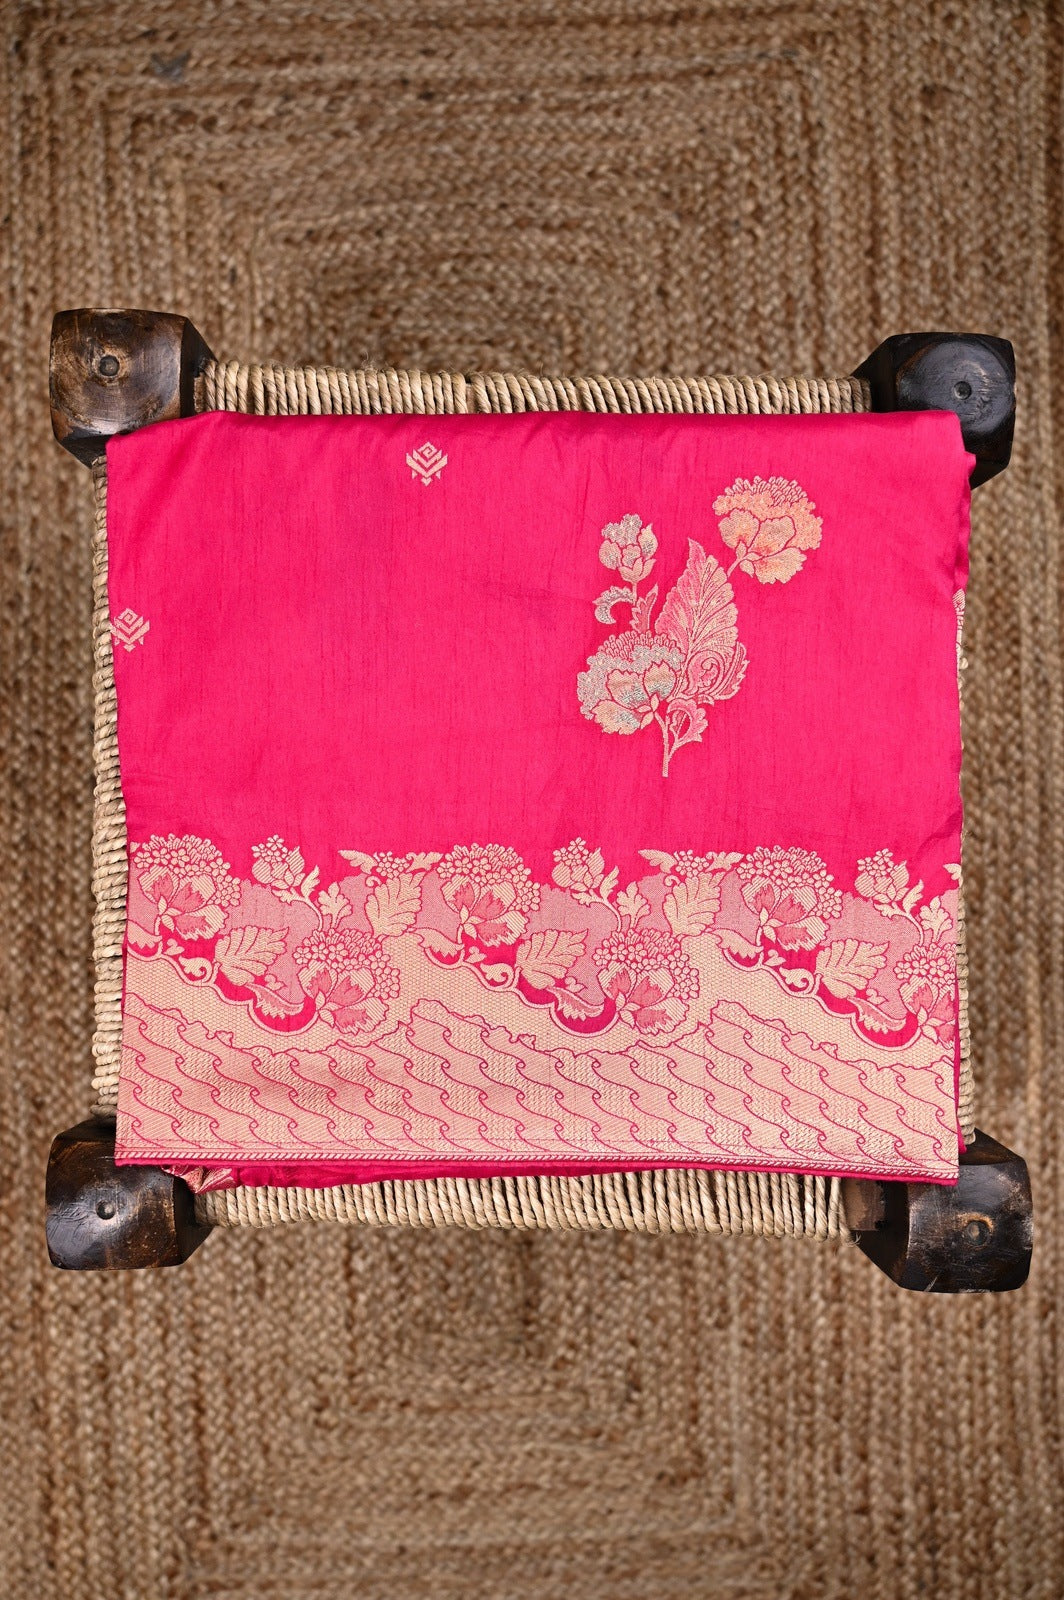 Dola silk saree dark pink color with allover meenakari motives, rich pallu, small zari border and running plain blouse.